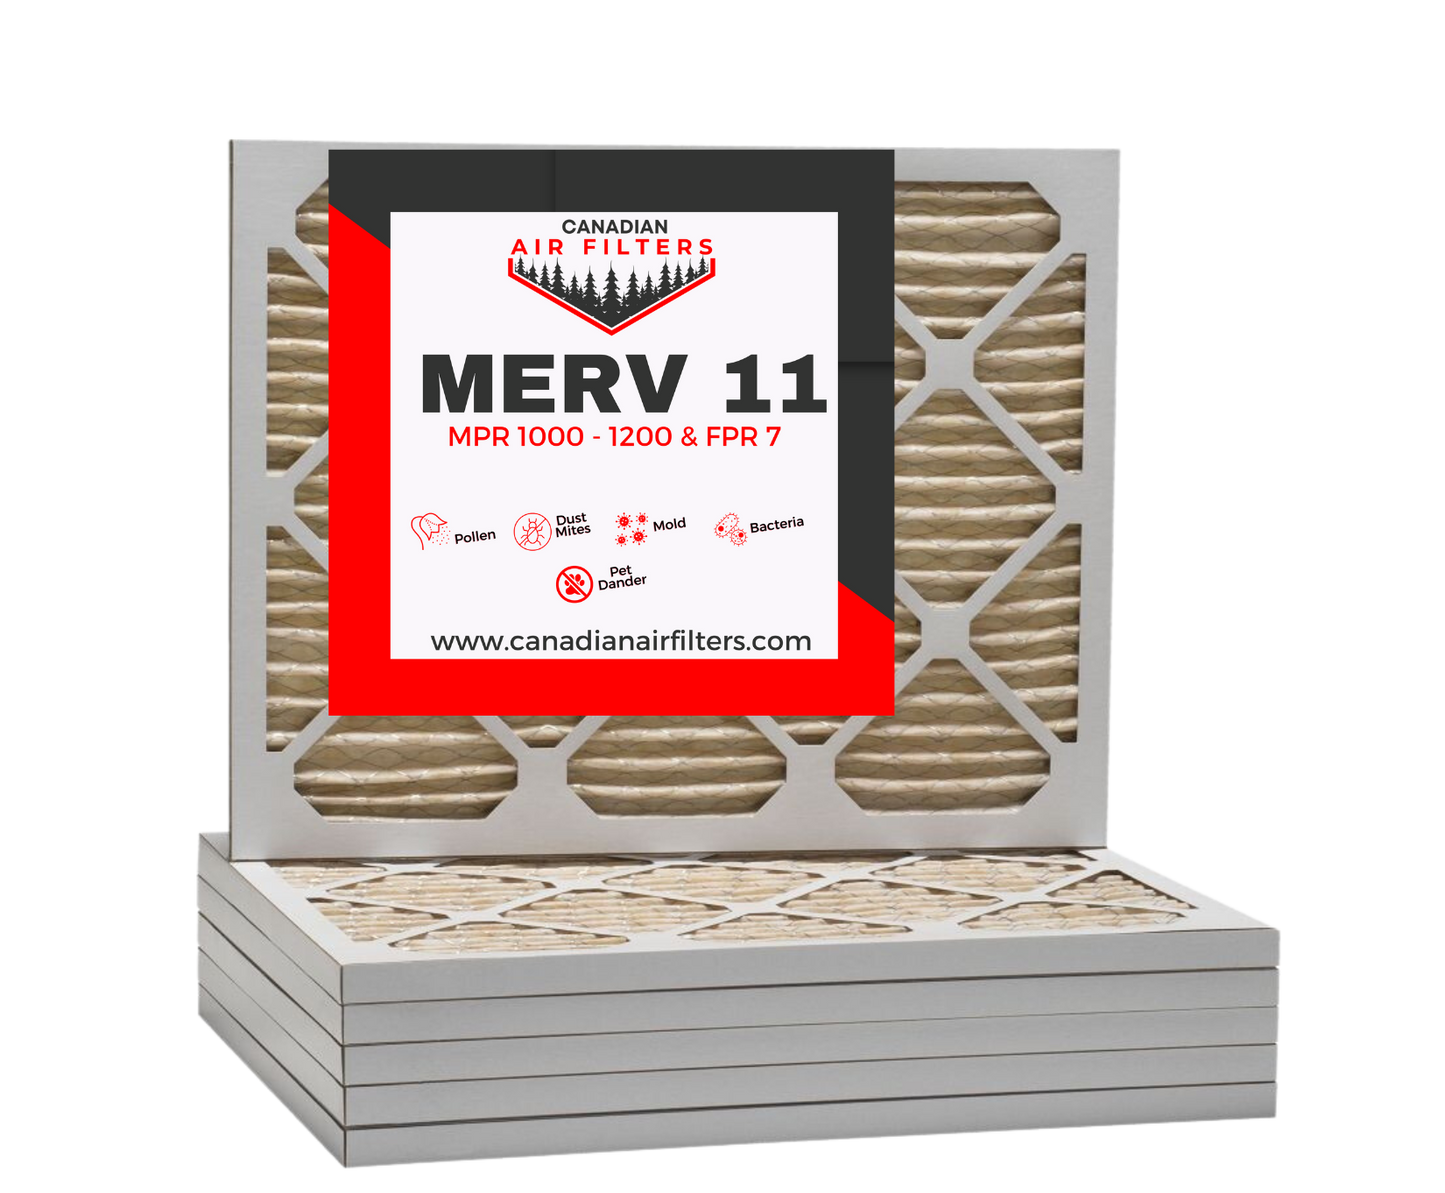 30 x 32 x 2 MERV 11 Pleated Air Filter (6 pack)